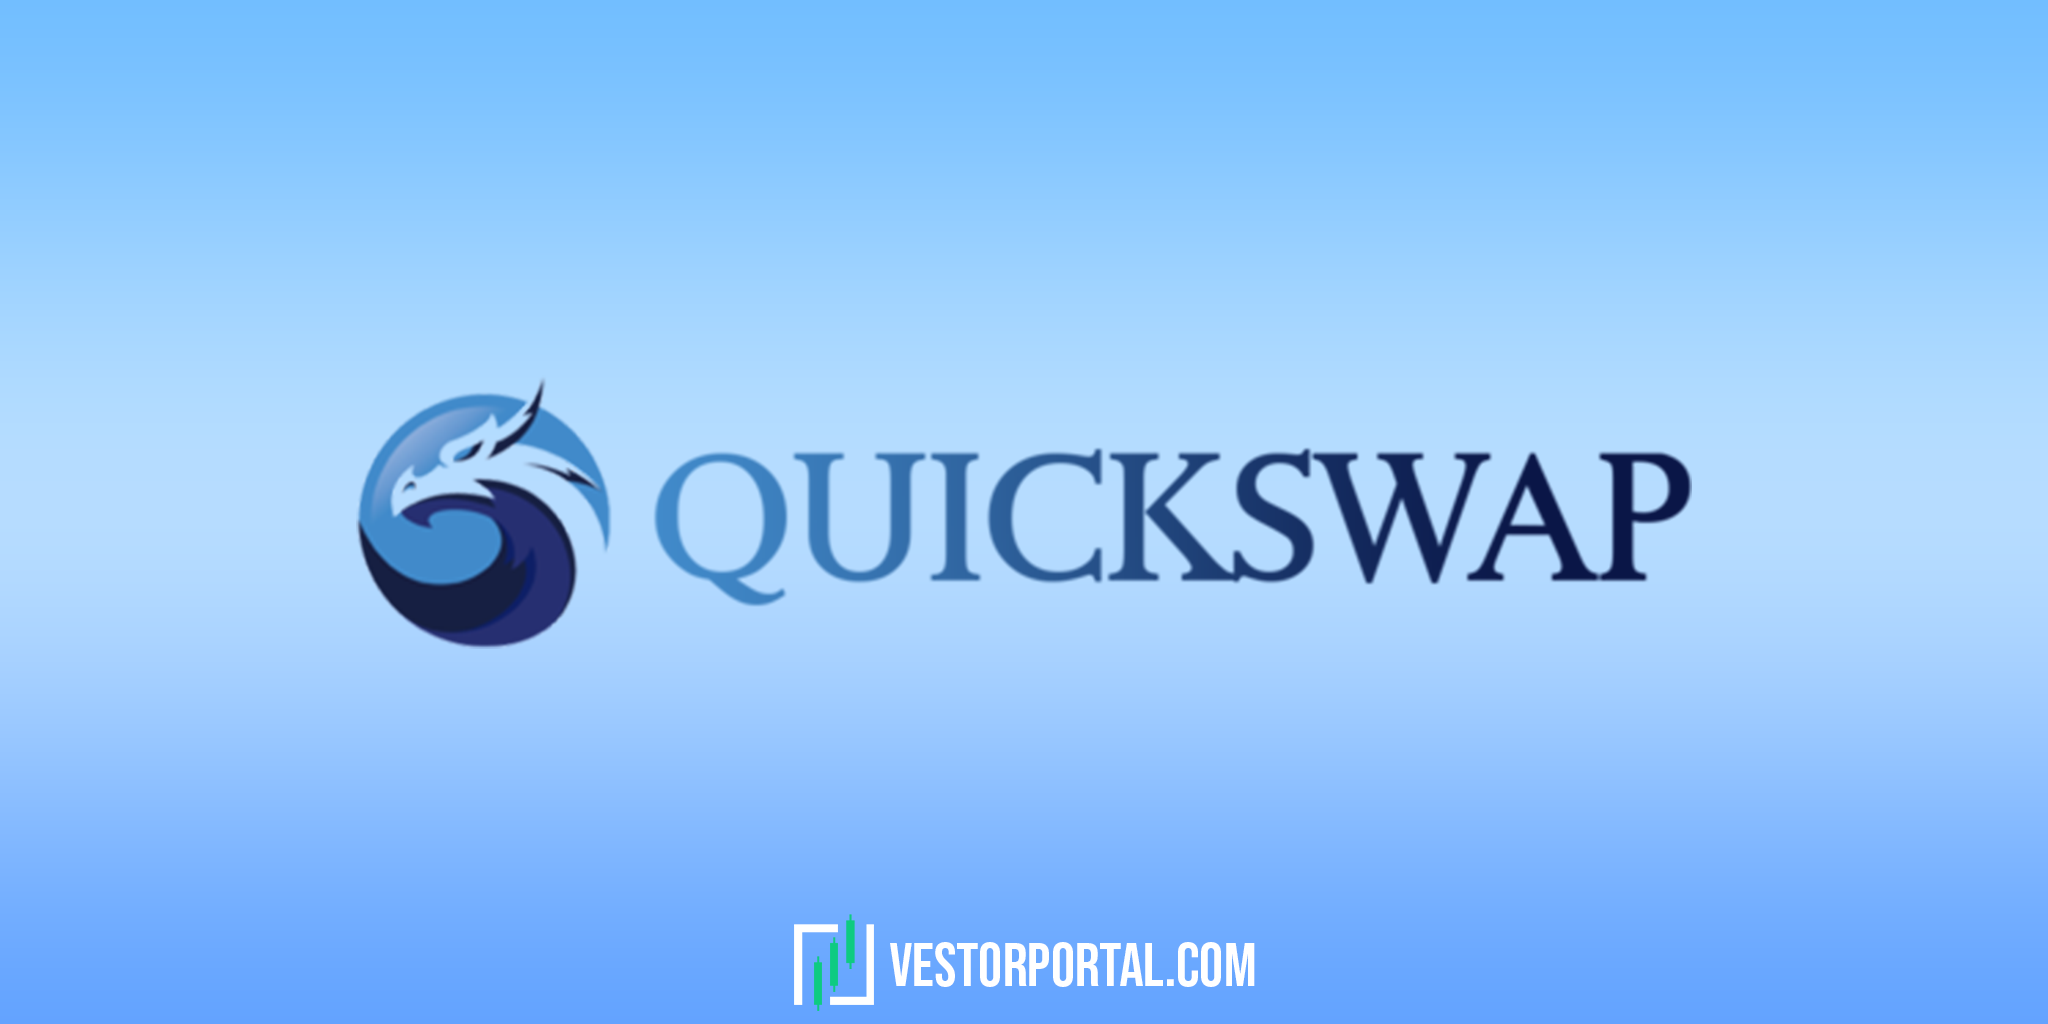 How to use QuickSwap?